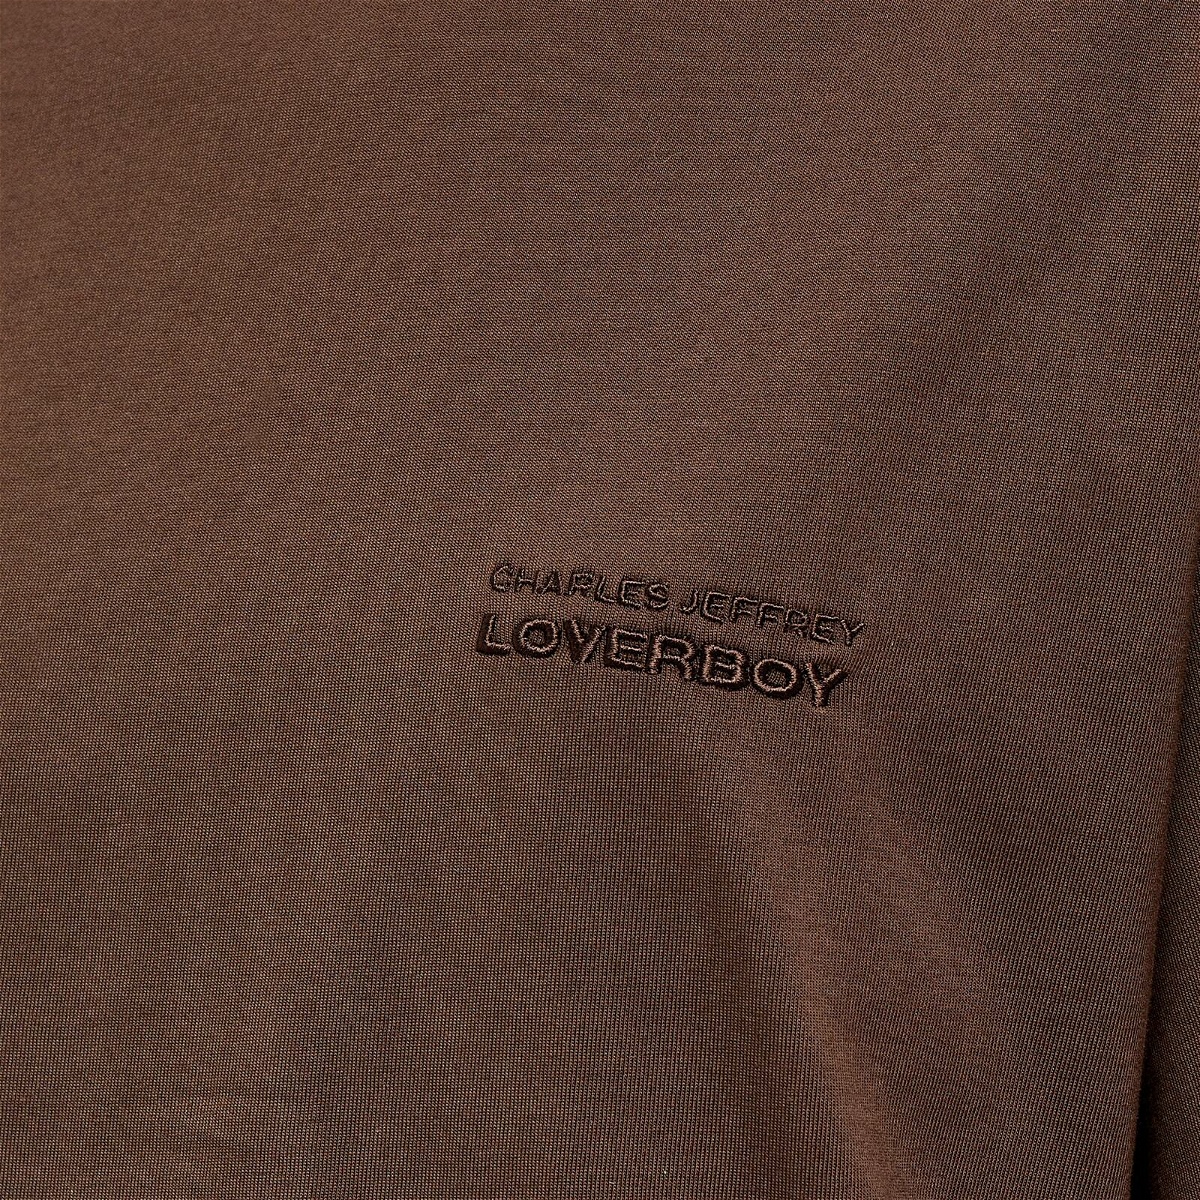 Charles Jeffrey Women's Art Gallery Logo T-Shirt in Brown